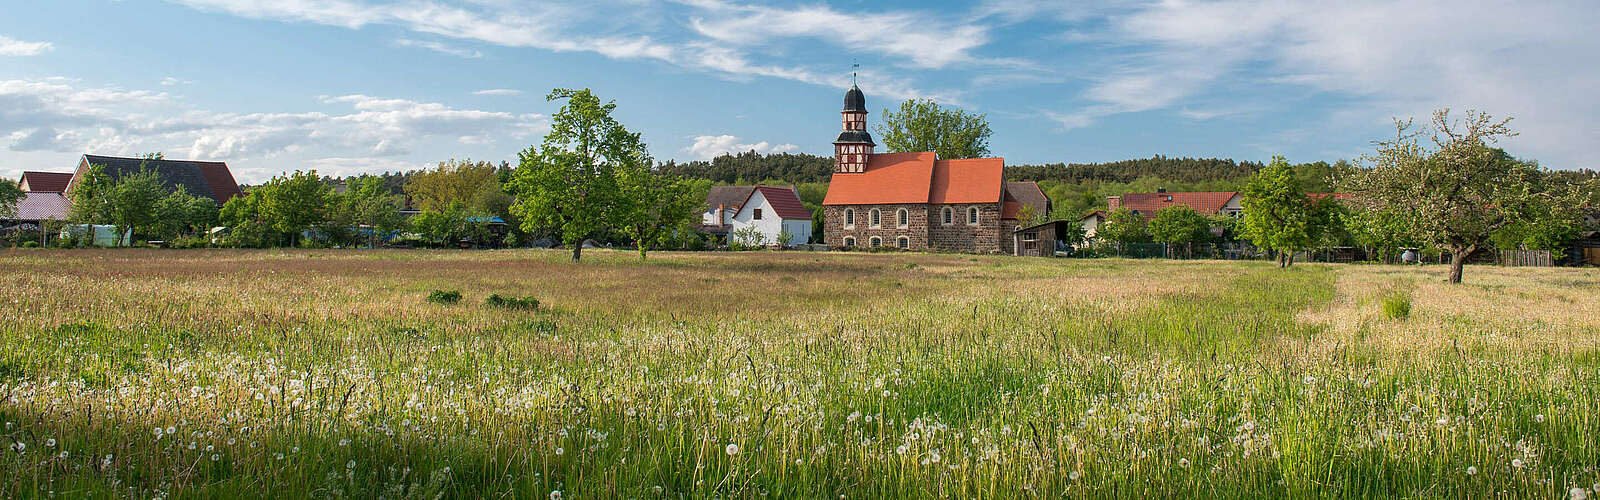 Kirche in Raben,
        
    

        Foto: Tourismusverband Fläming e.V./Klaus-Peter Kappest